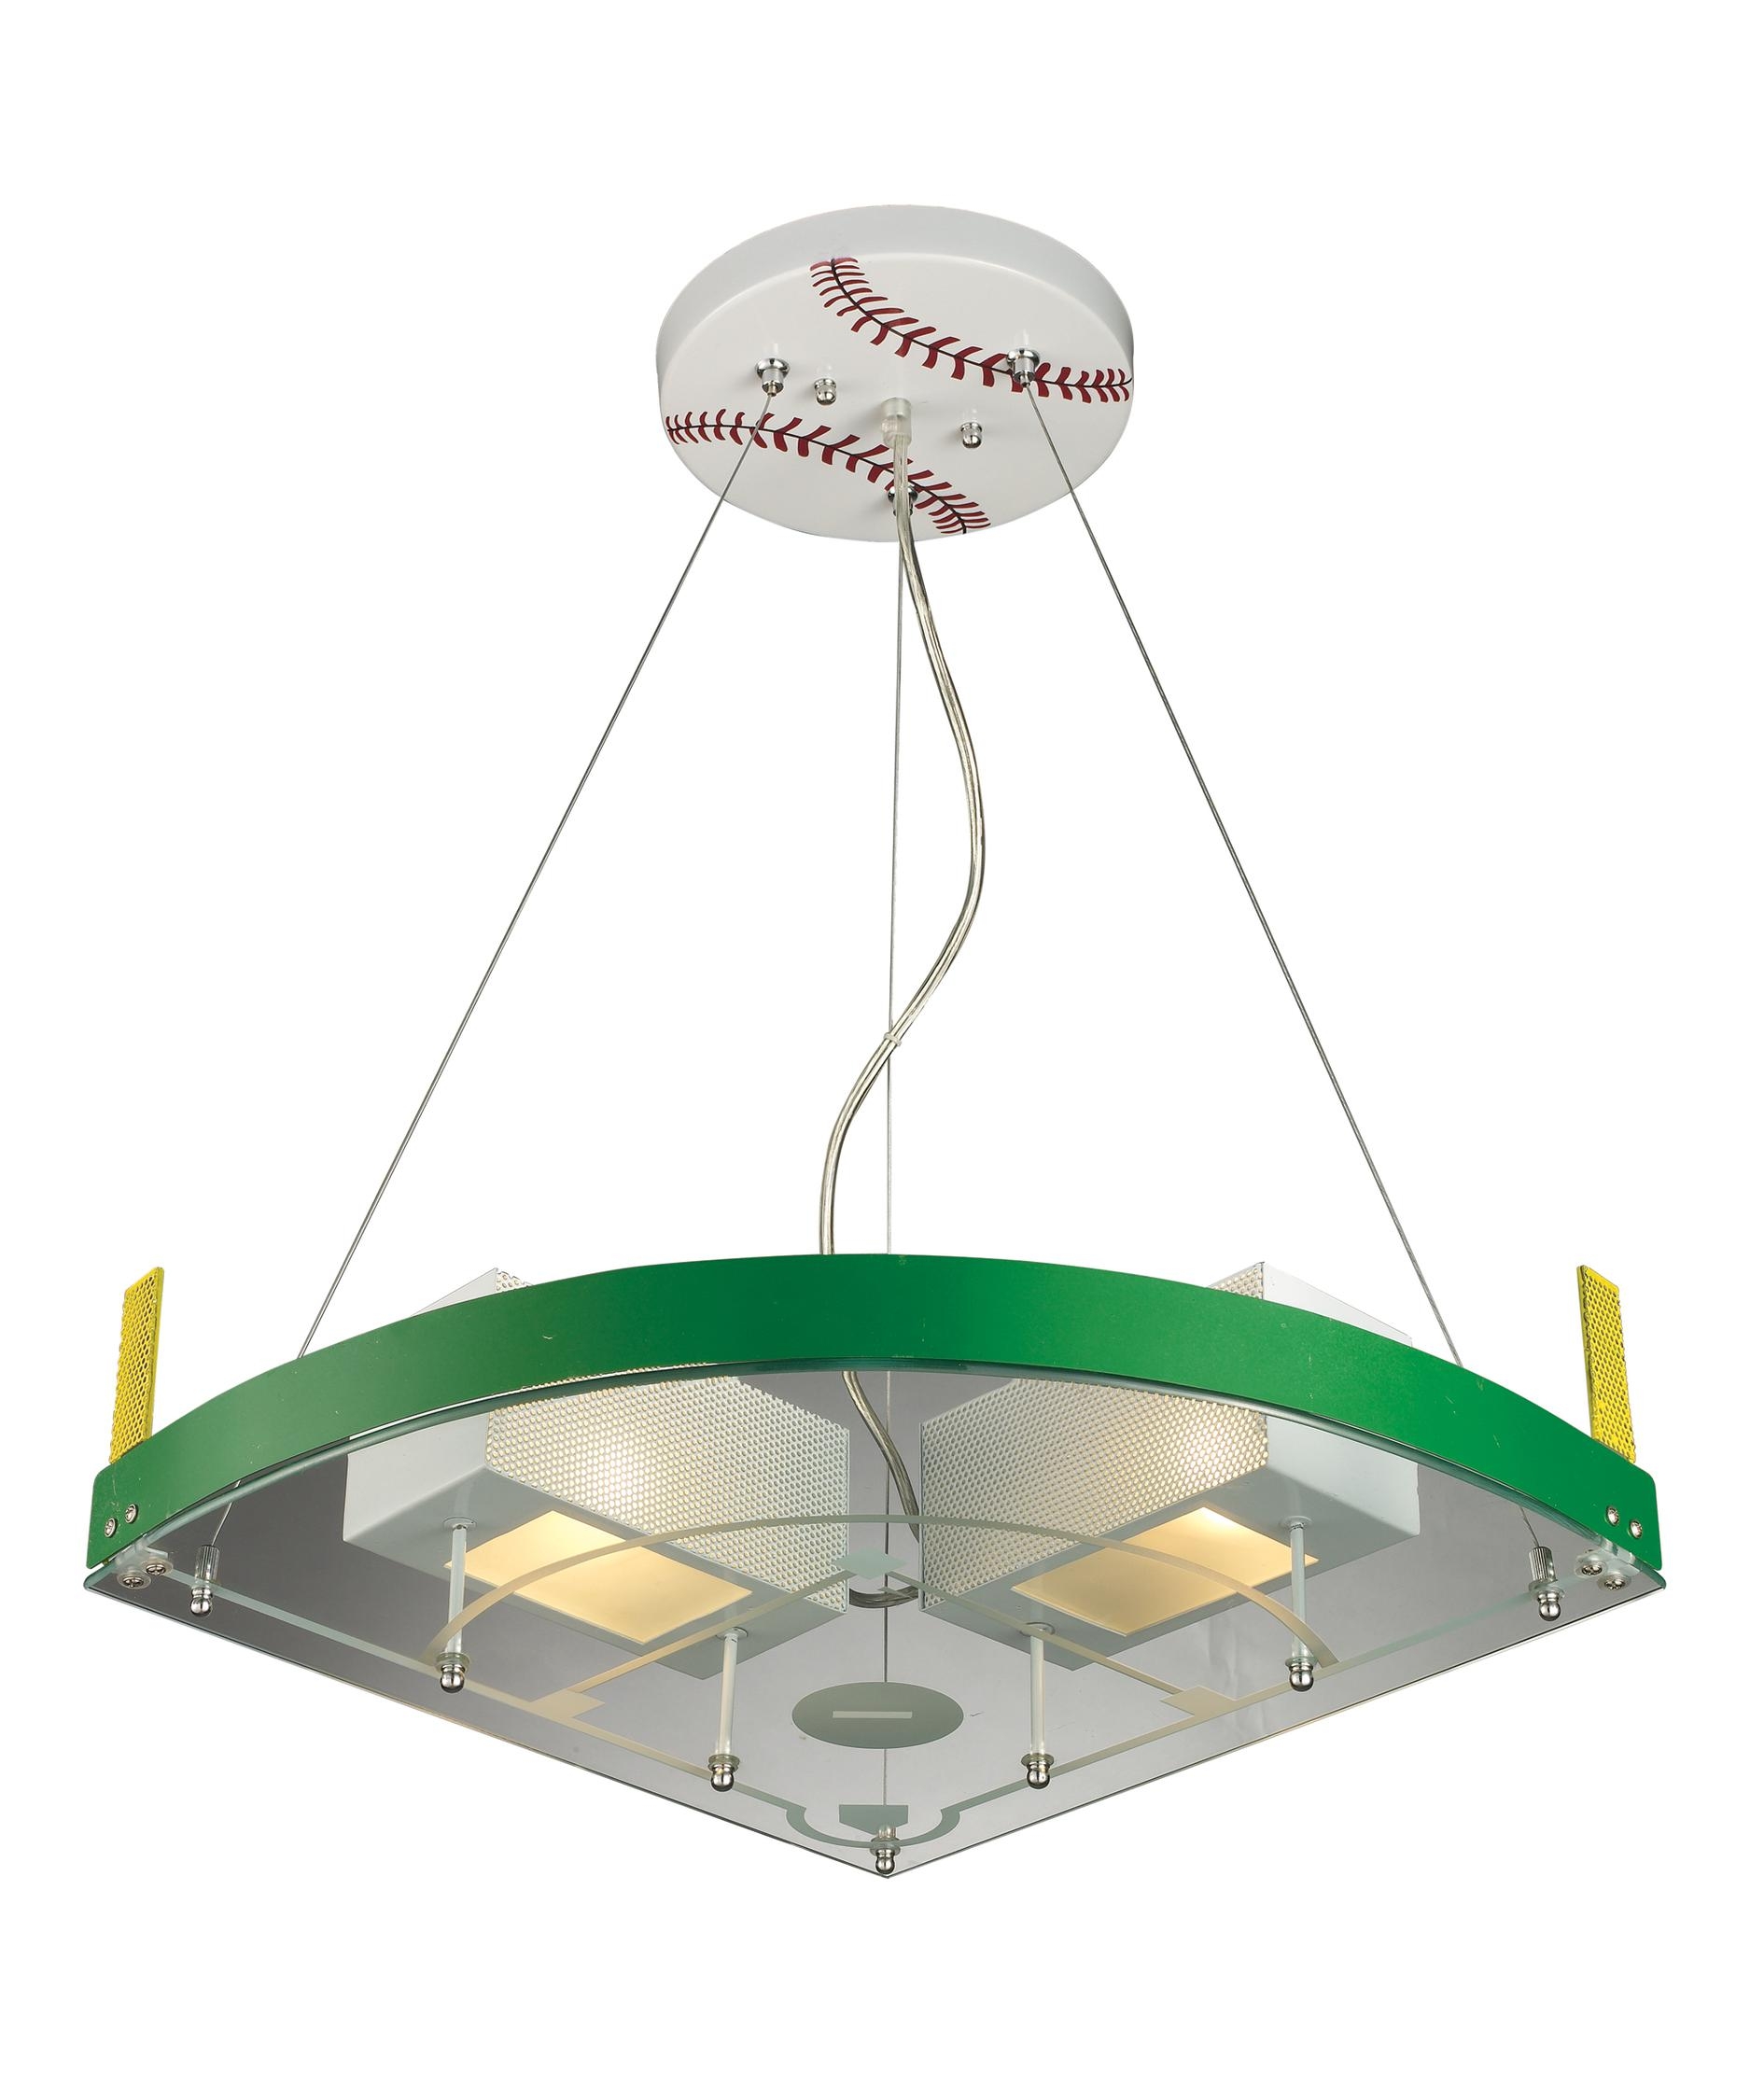 Permalink to Baseball Themed Ceiling Light